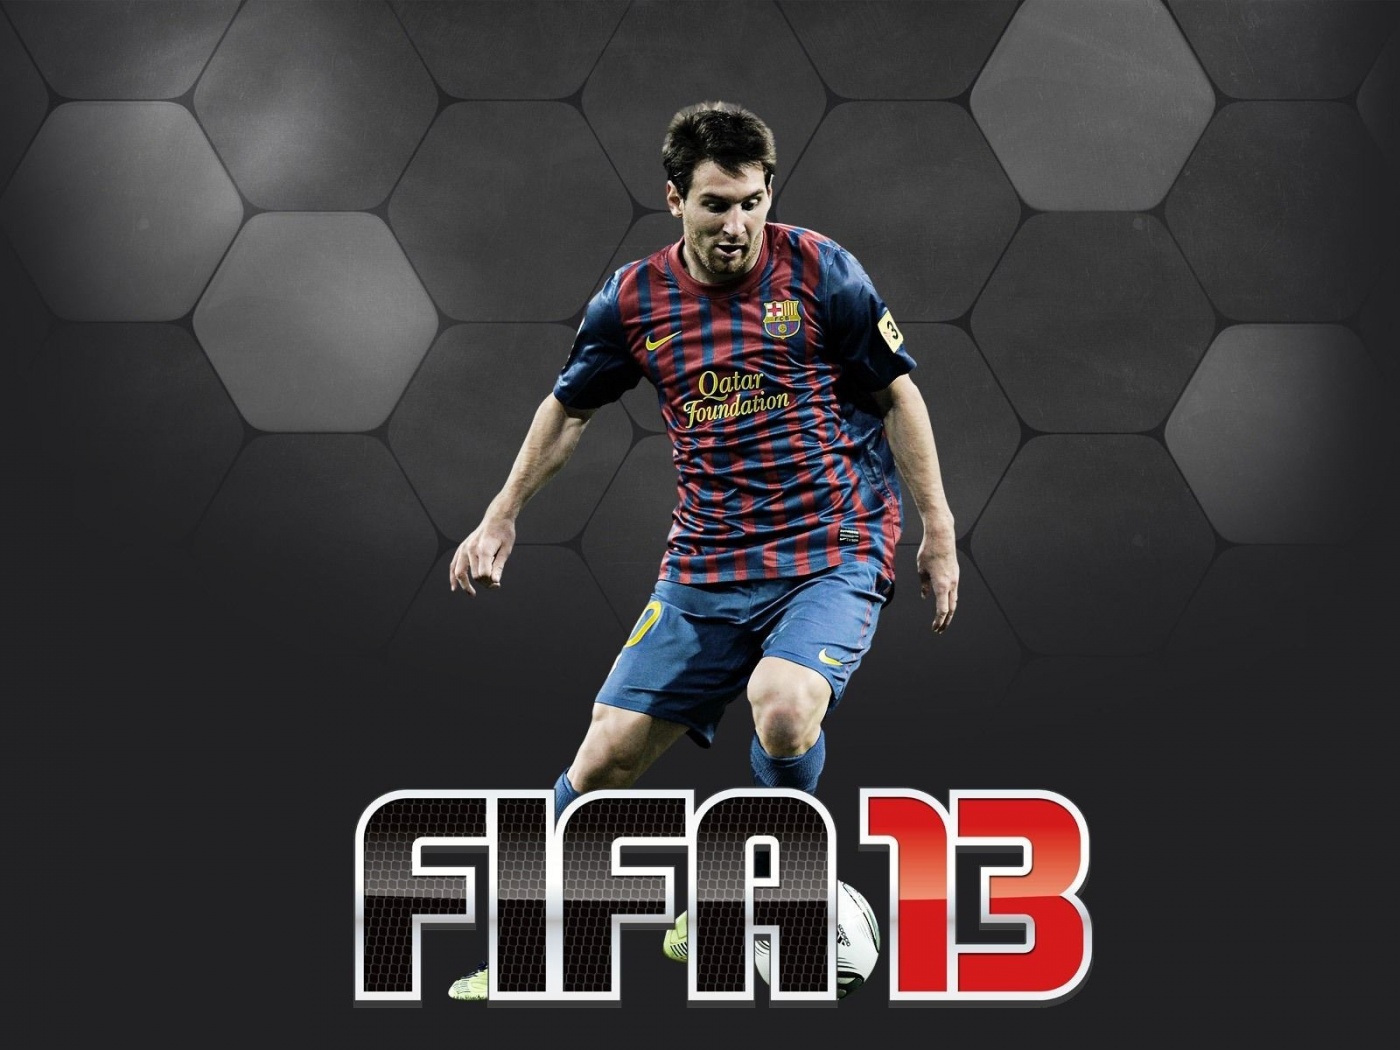 Fifa 13 Messi Football Game